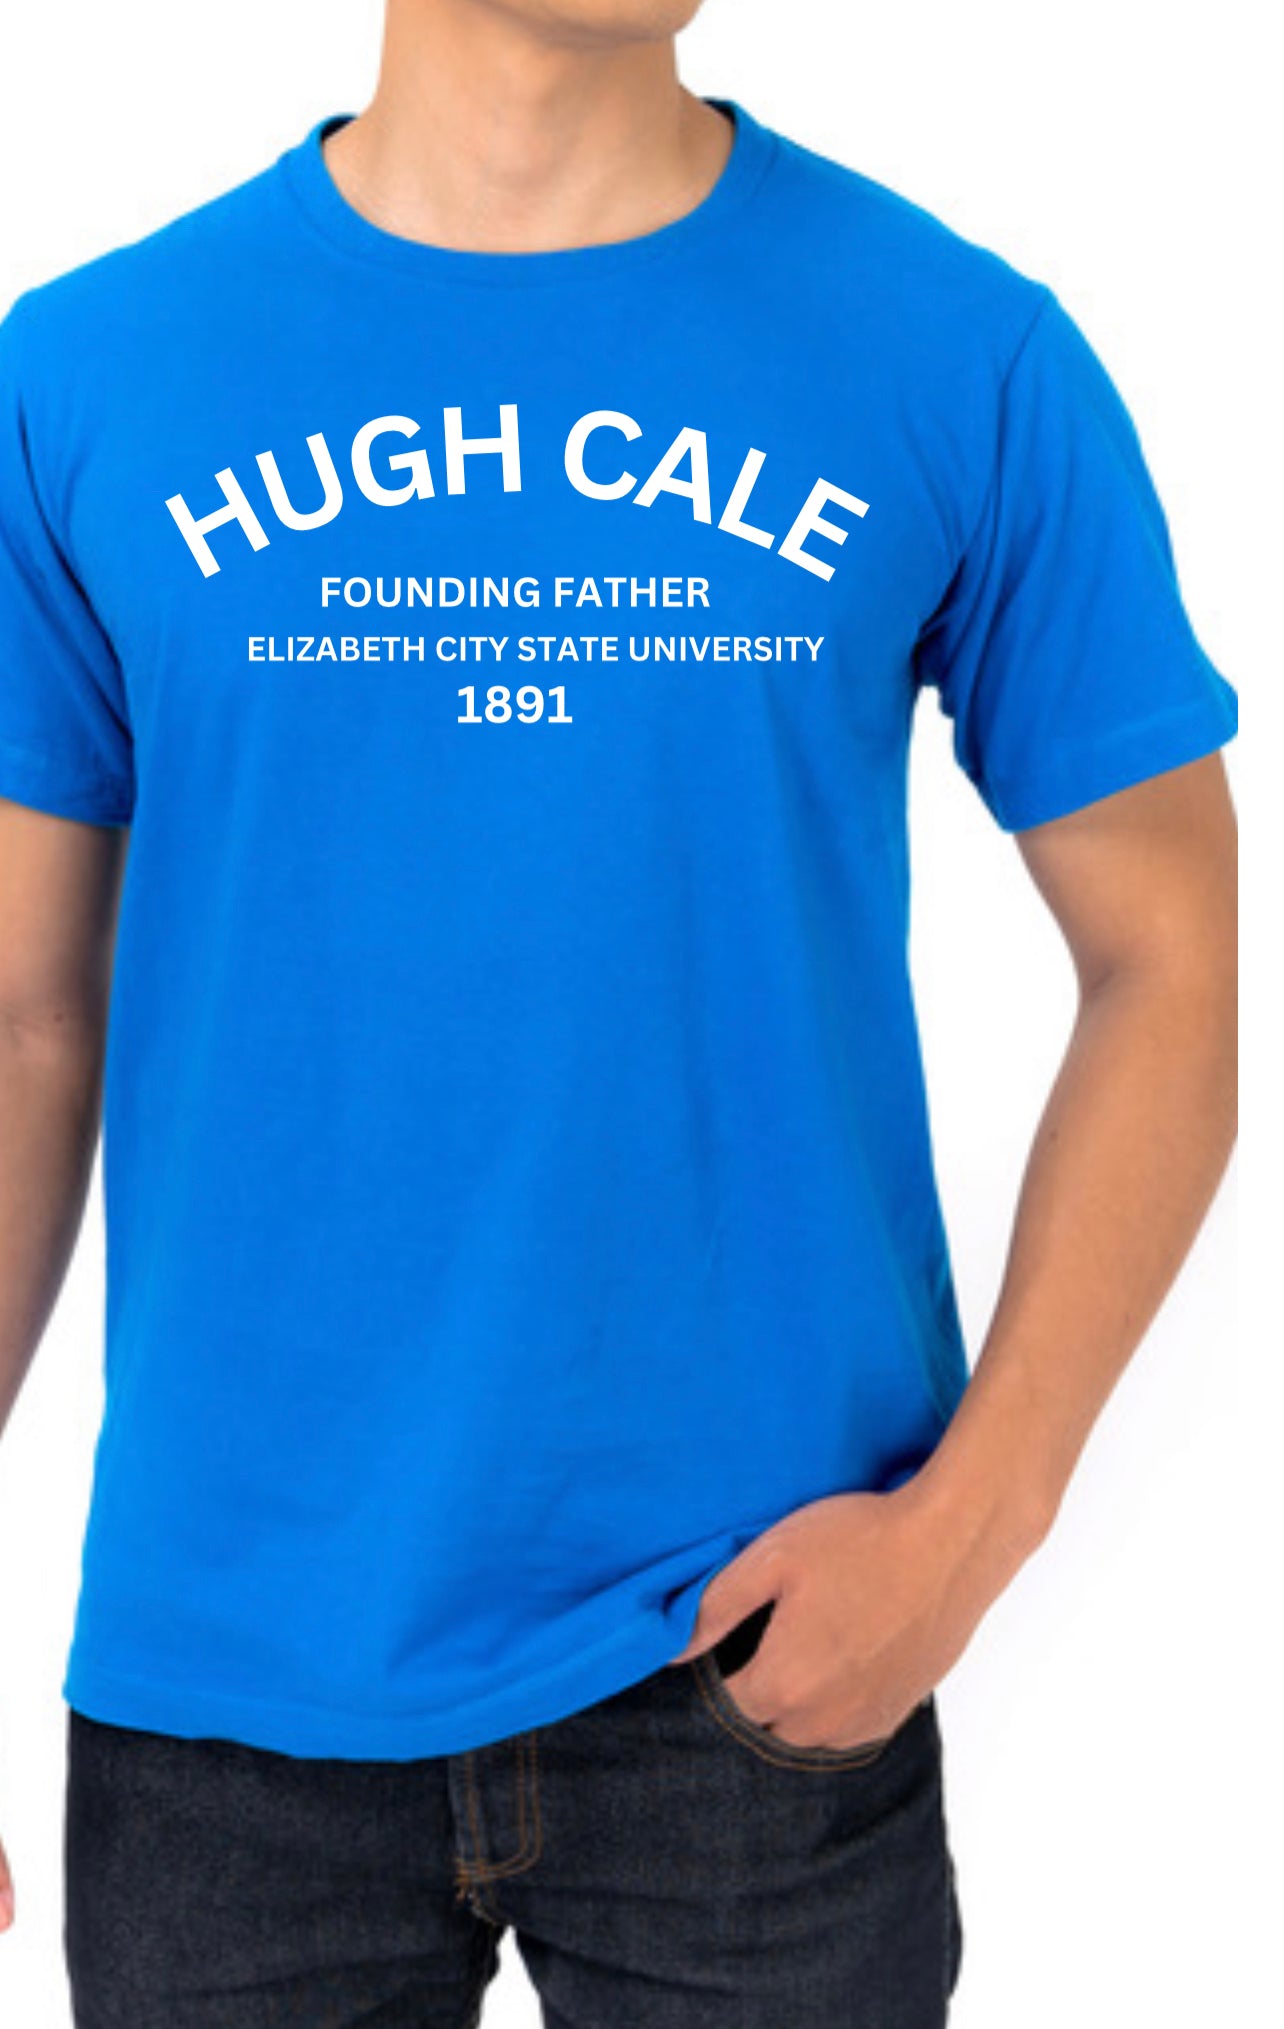 Founding Father- Hugh Cale